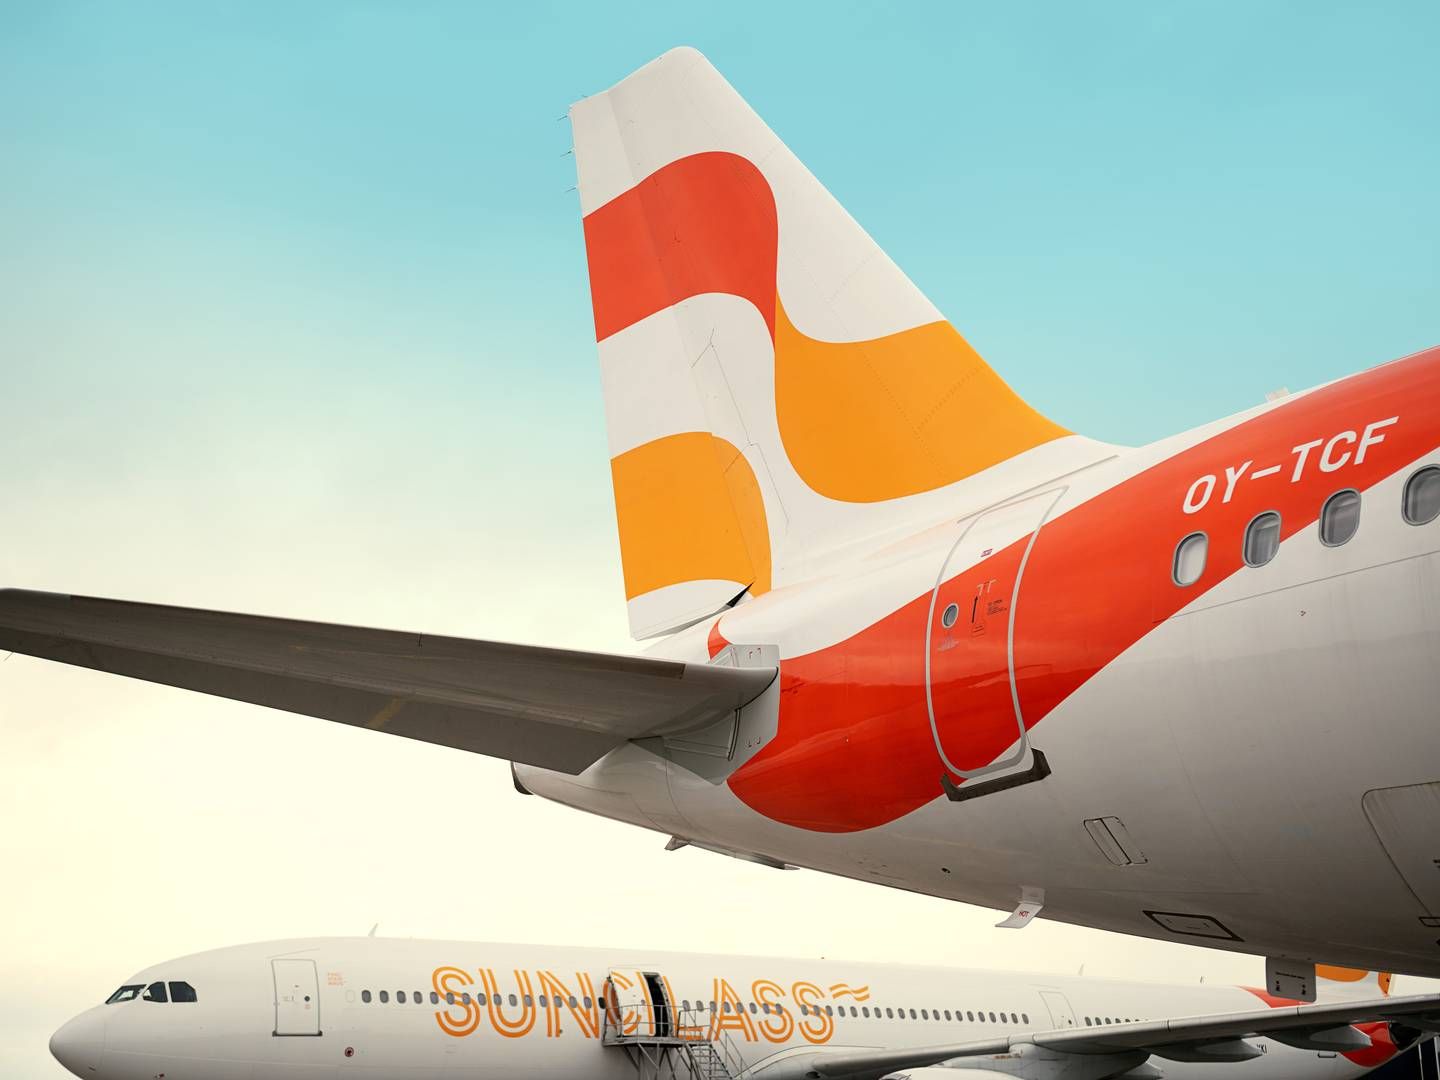 Sunclass Airlines kan se hullet i egenkapitalen nærme sig en halv mia. kr. | Foto: Pr / Spies